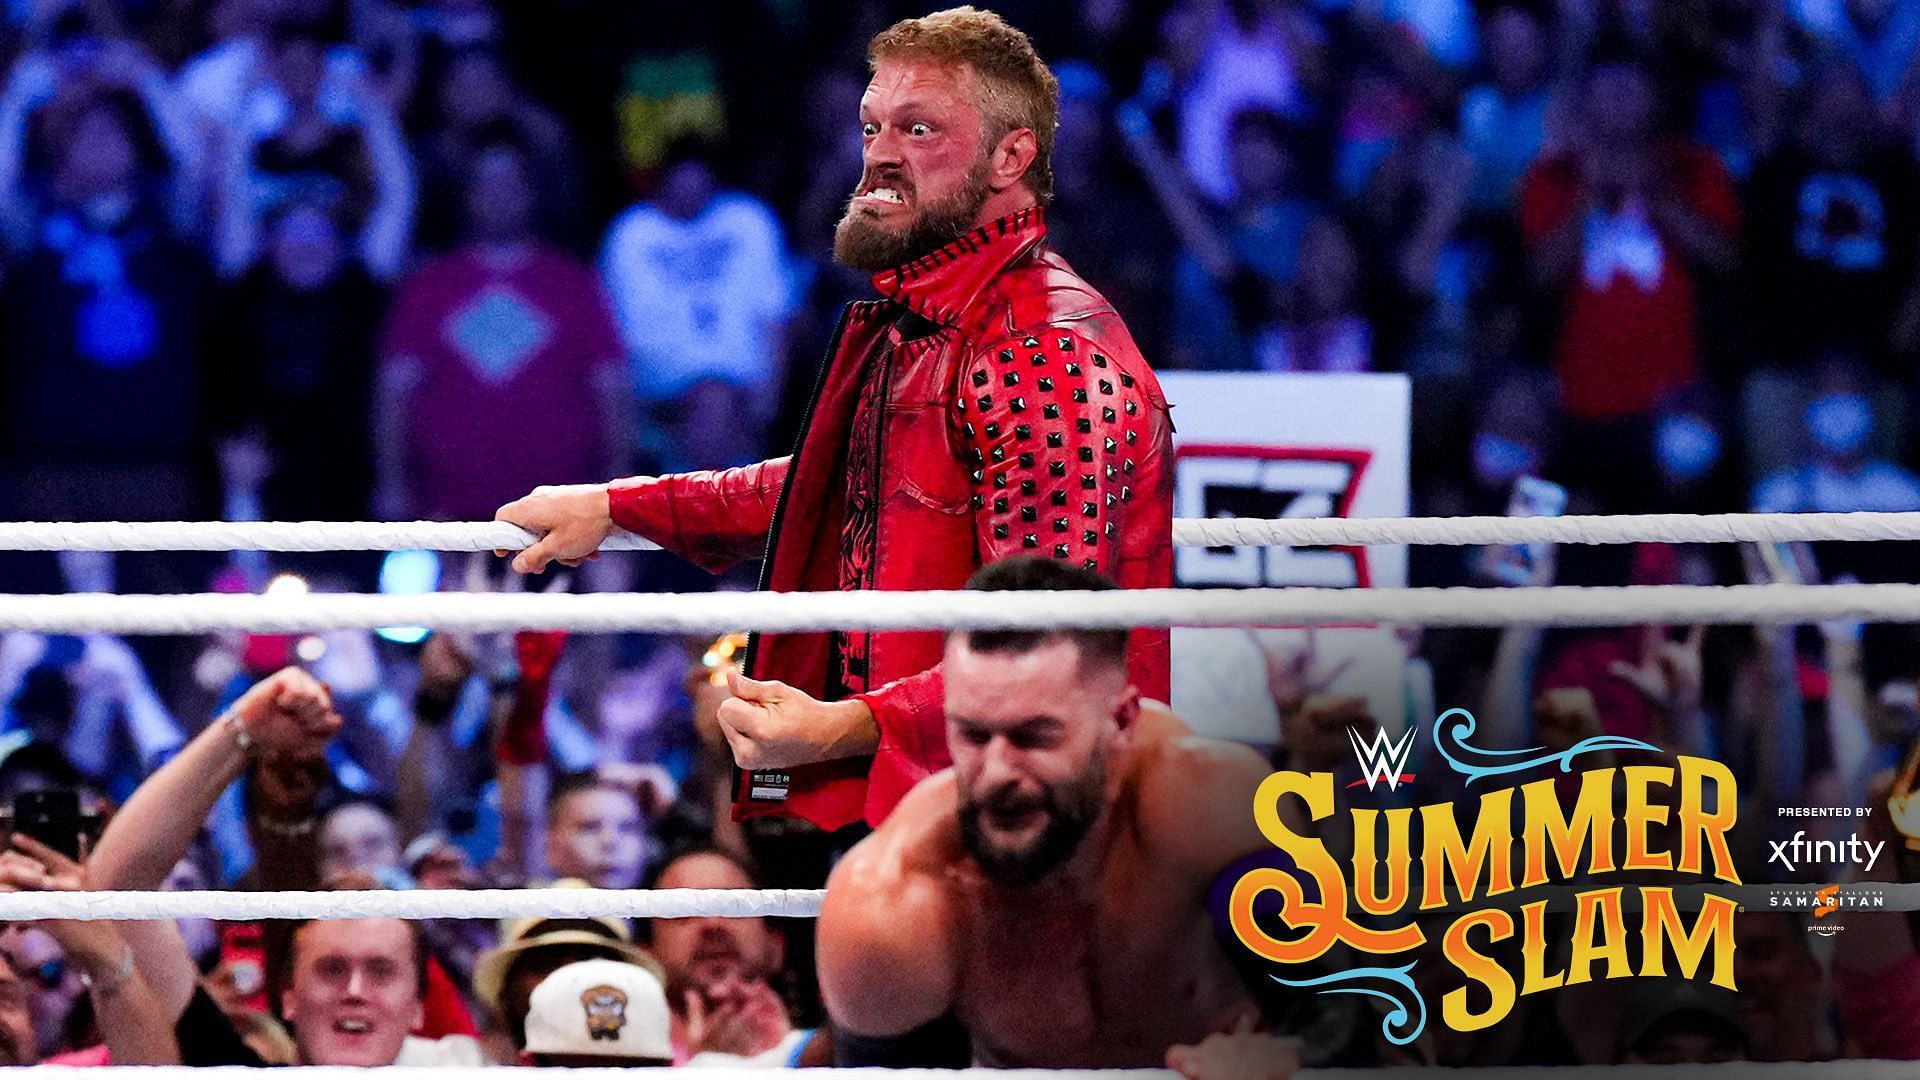 Edge made a triumphant WWE return at Summerslam